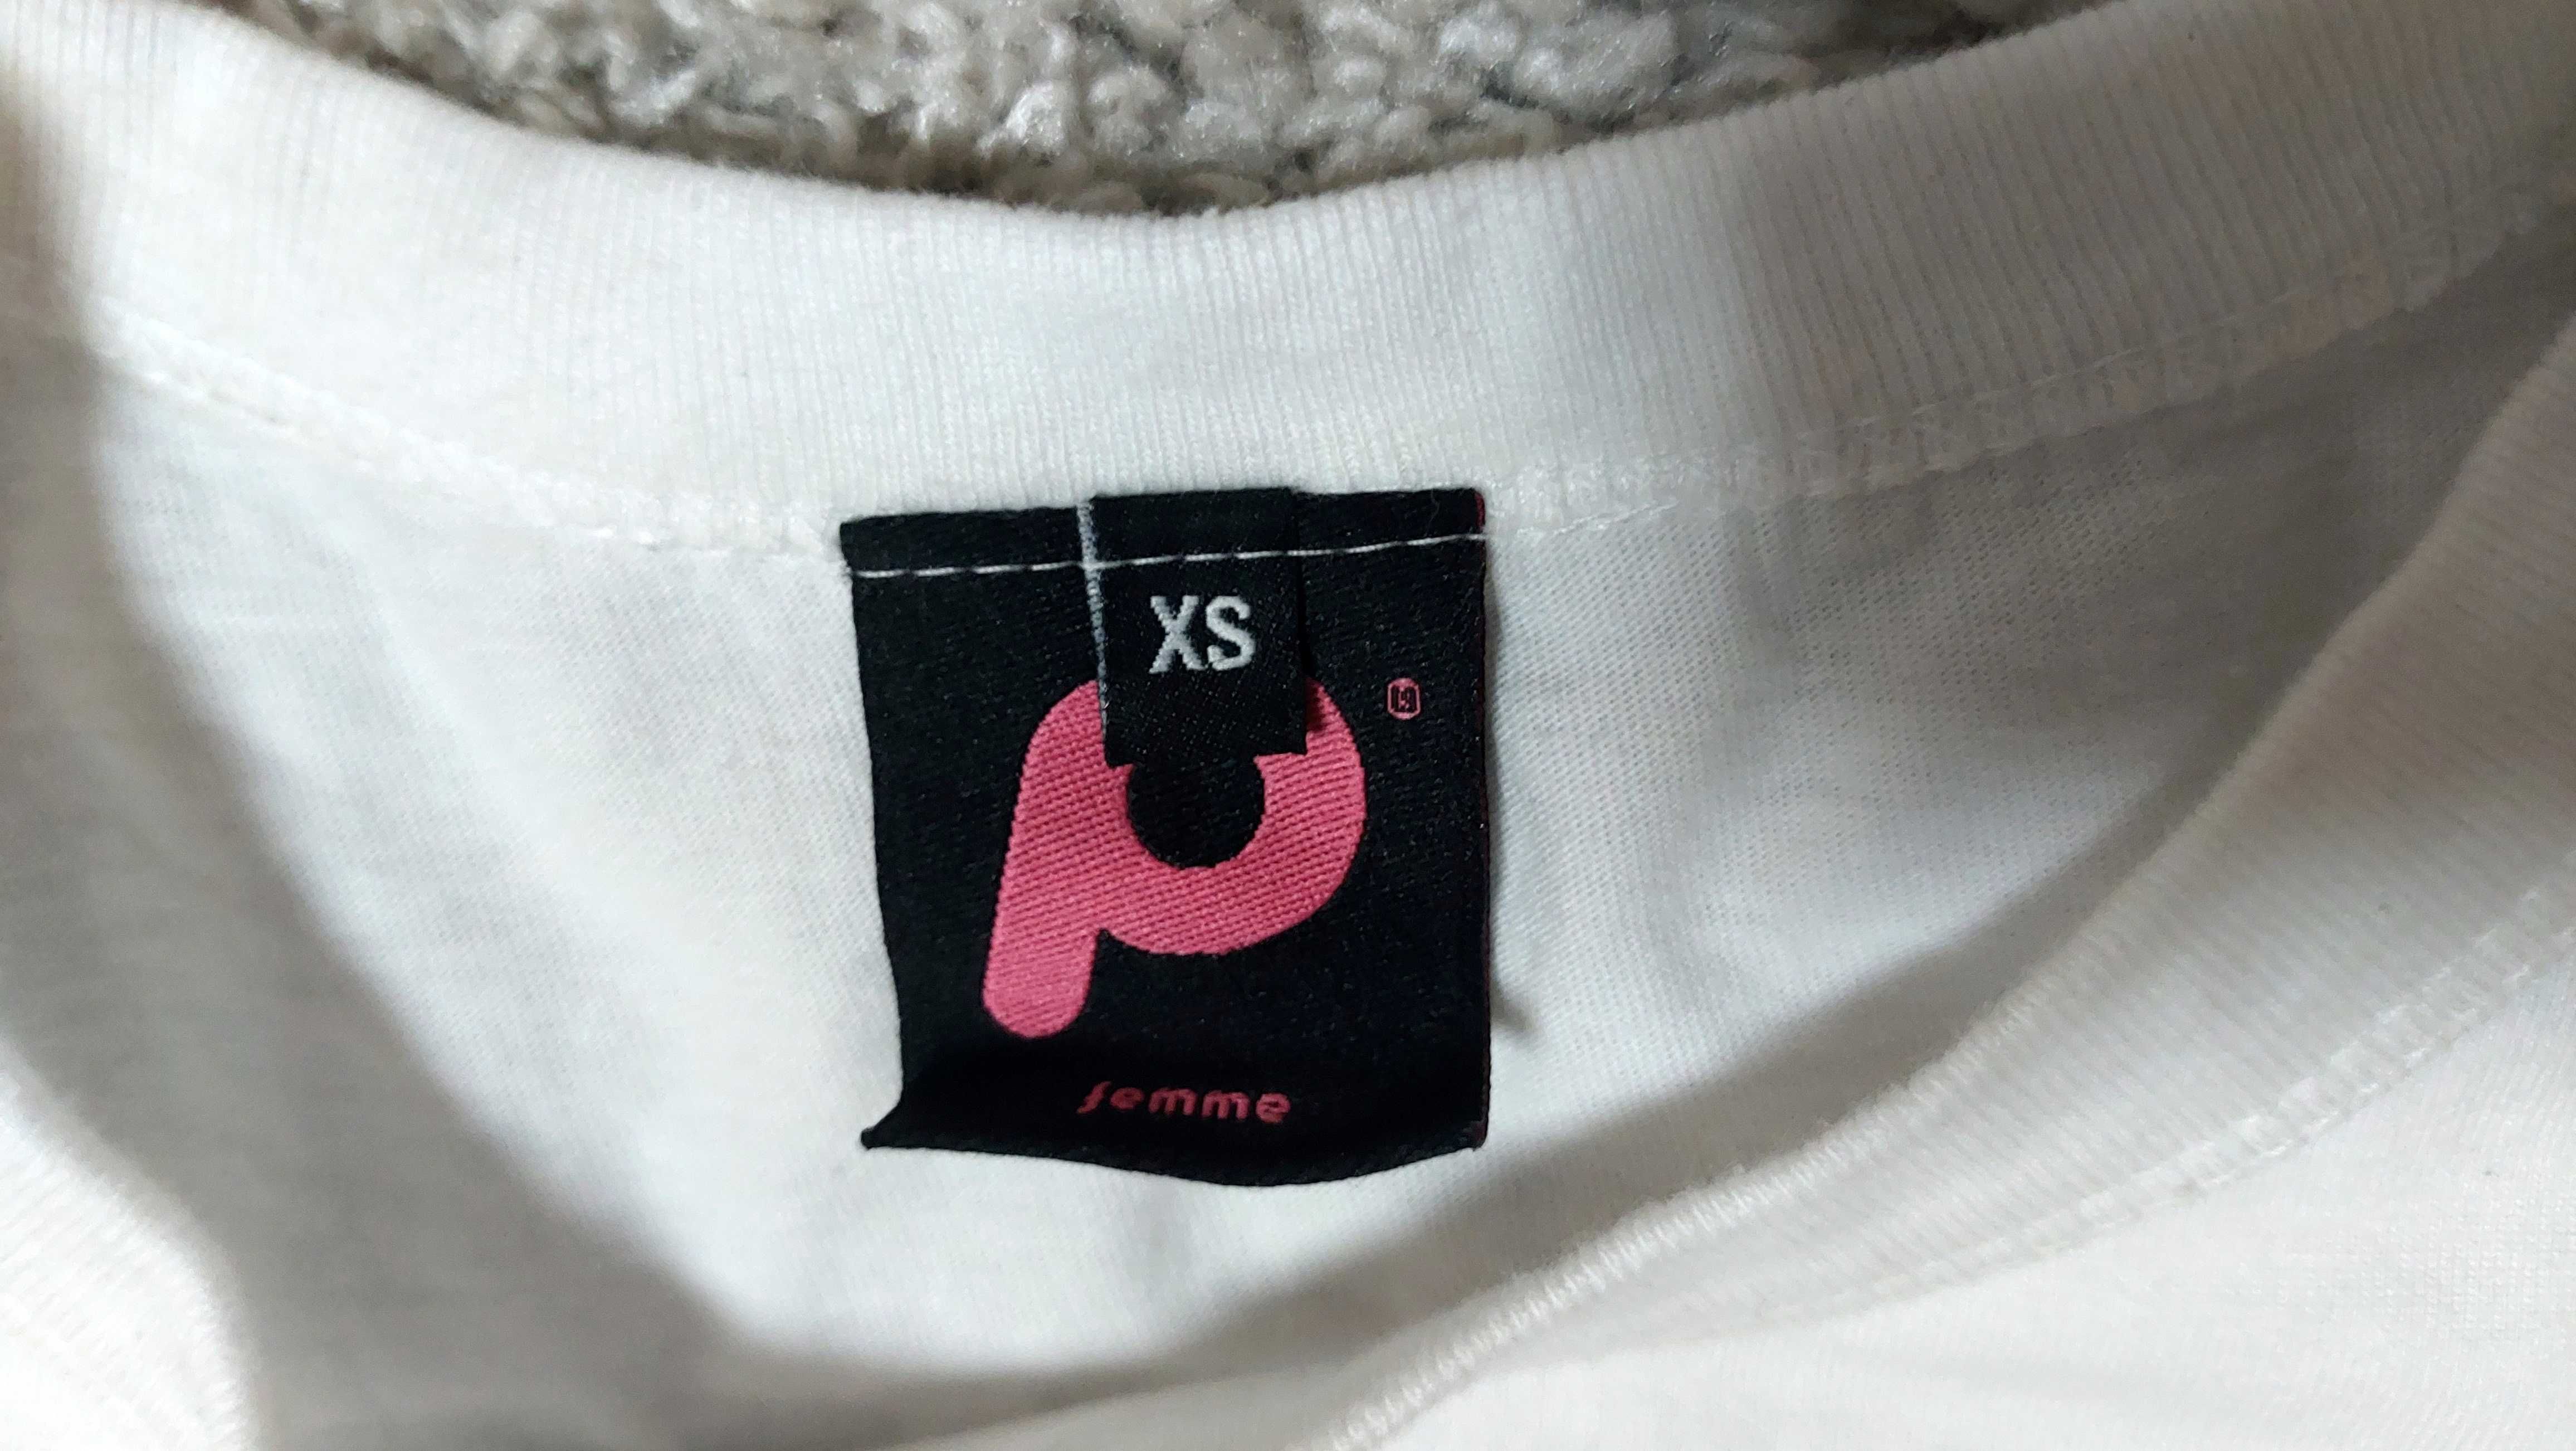 T-shirt PATRIOTIC 10 damski roz. XS - jak nowa! POLECAM